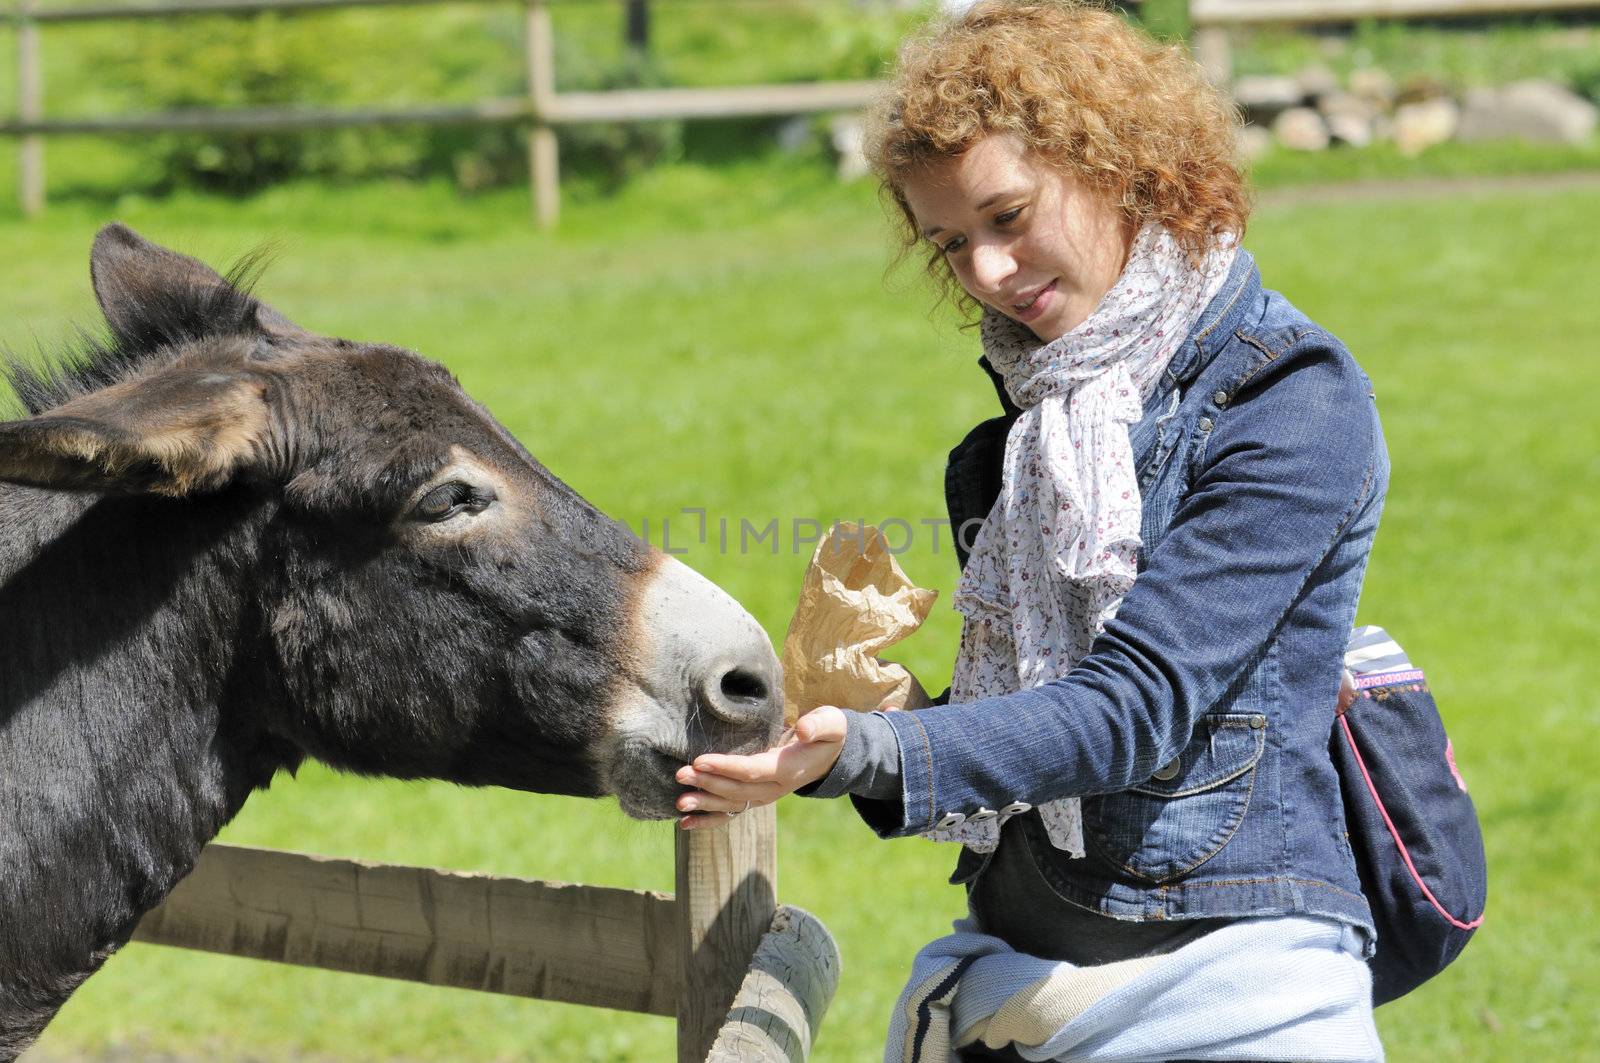 Girl feeding donkey by fahrner